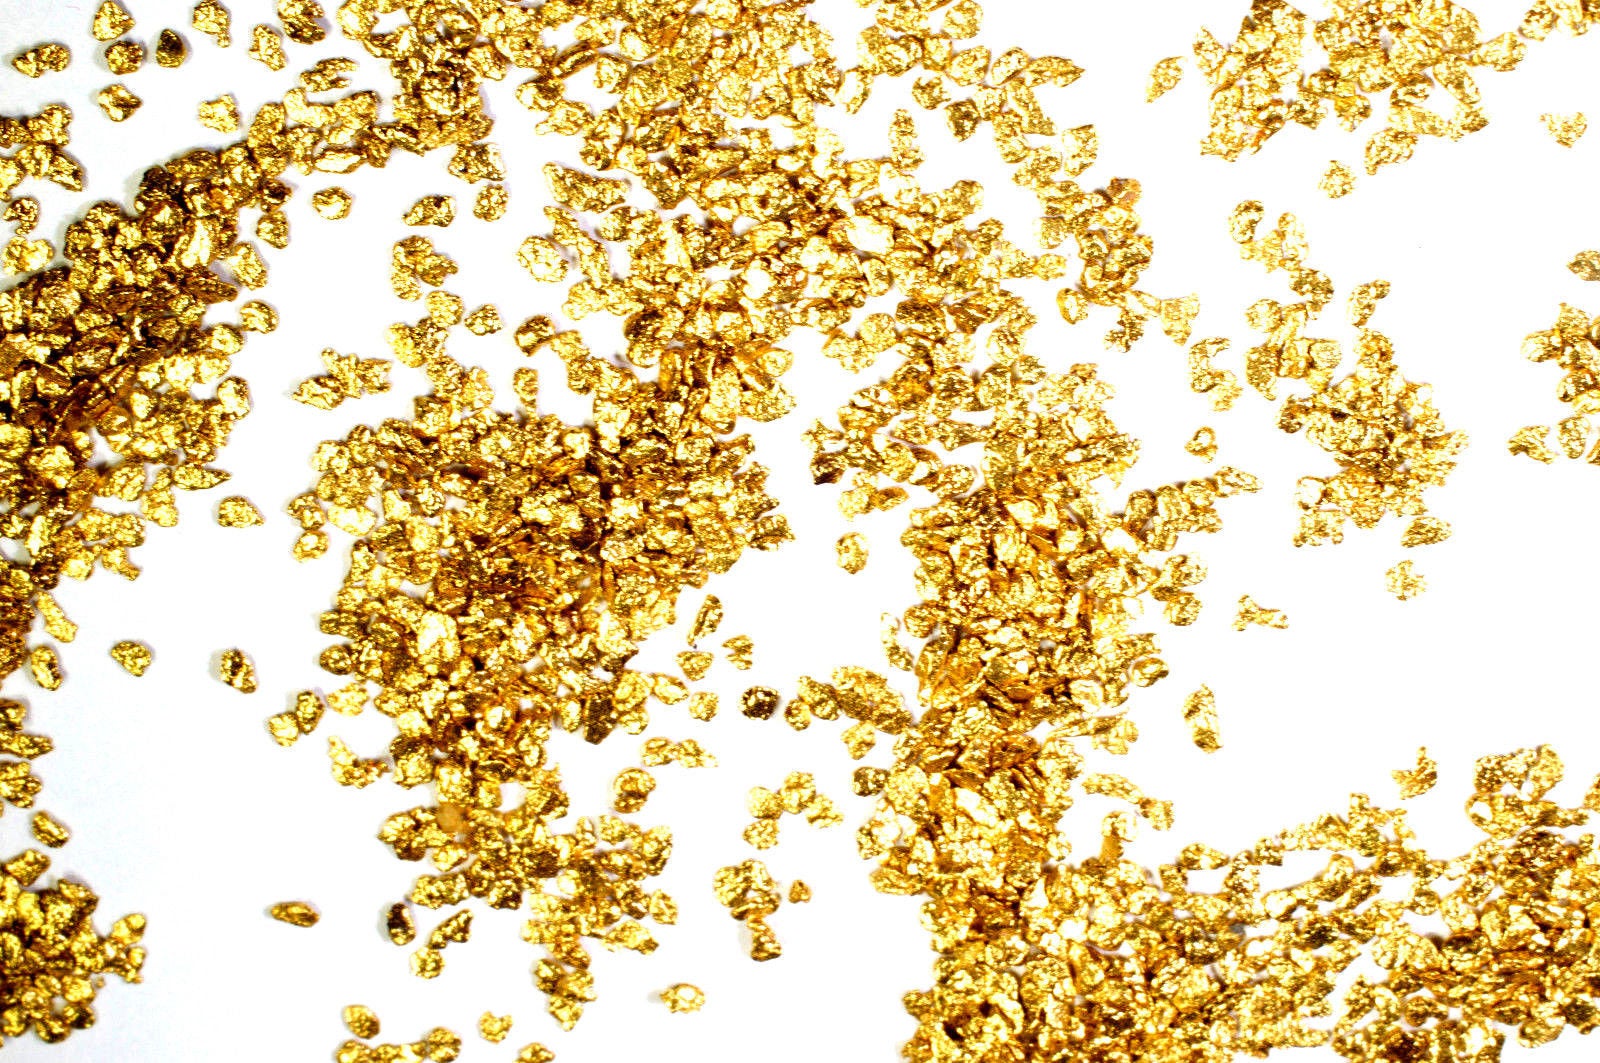 0.125 GRAMS ALASKAN YUKON BC NATURAL PURE GOLD NUGGETS #20 MESH - Liquidbullion